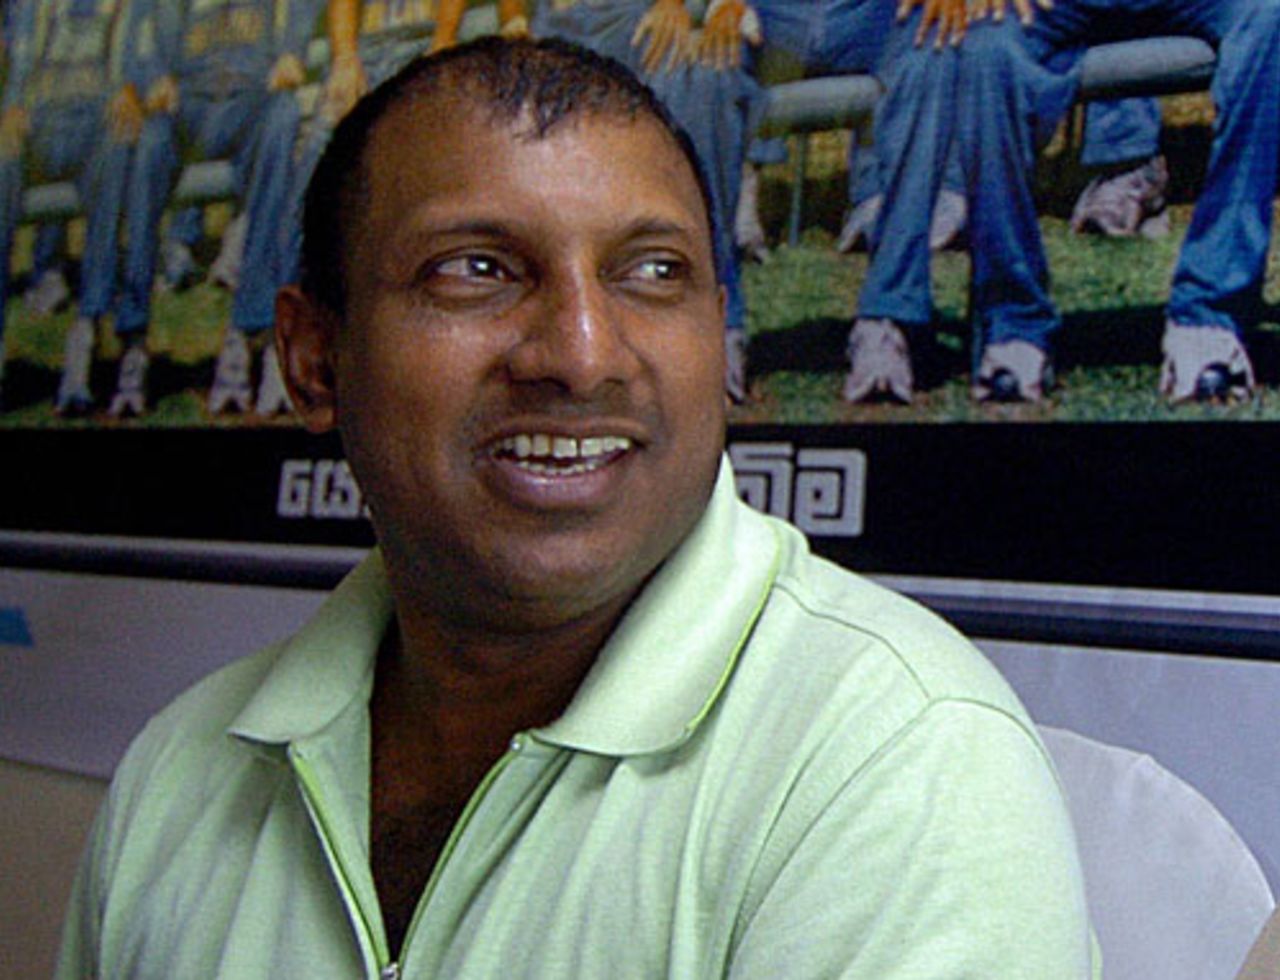 Aravinda de Silva looks on during a promotional event, Colombo, April 23, 2007